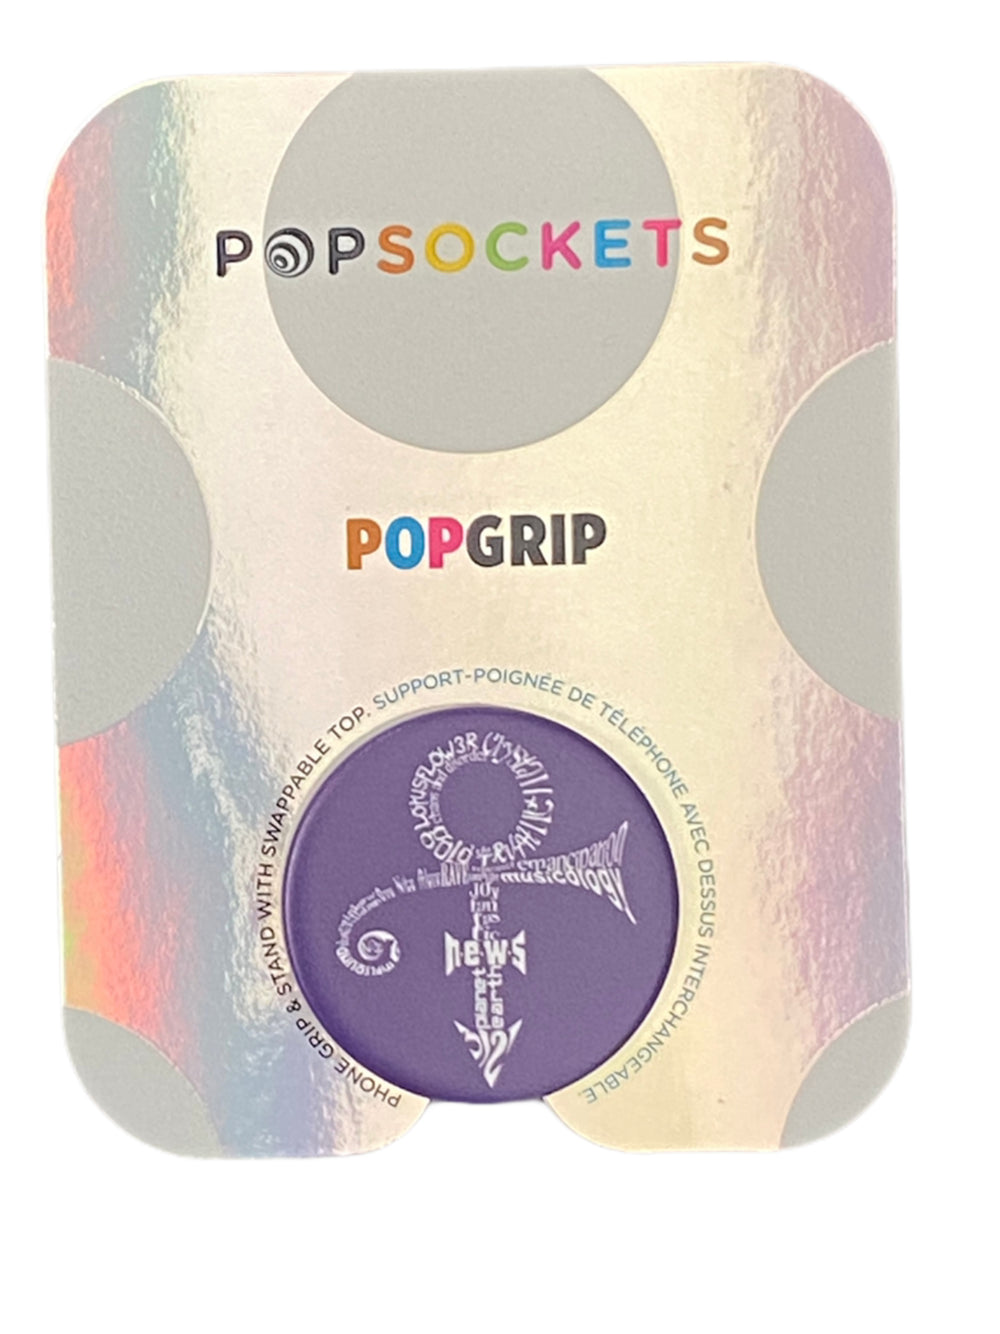 Prince – Official Estate Phone Popsocket Pop Grip Anthology 1995 - 2010 Purple